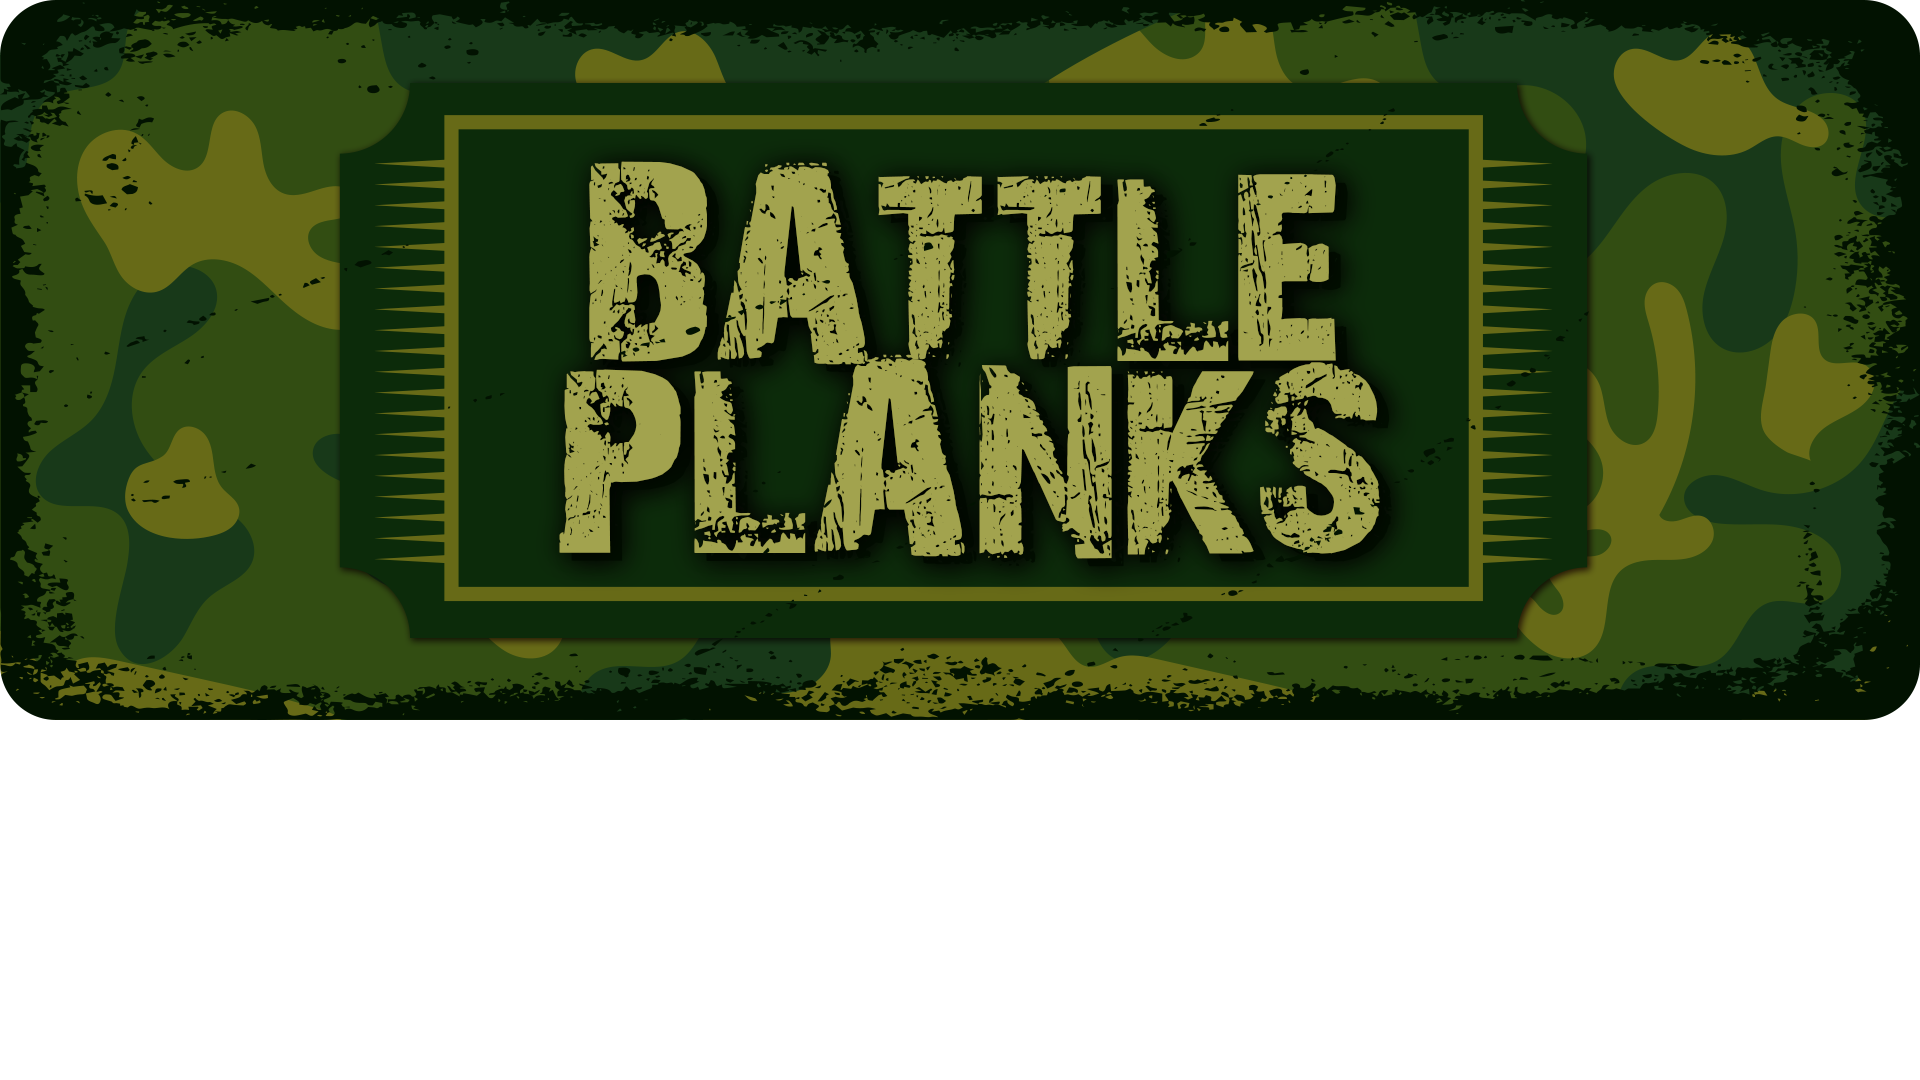 Battle Planks